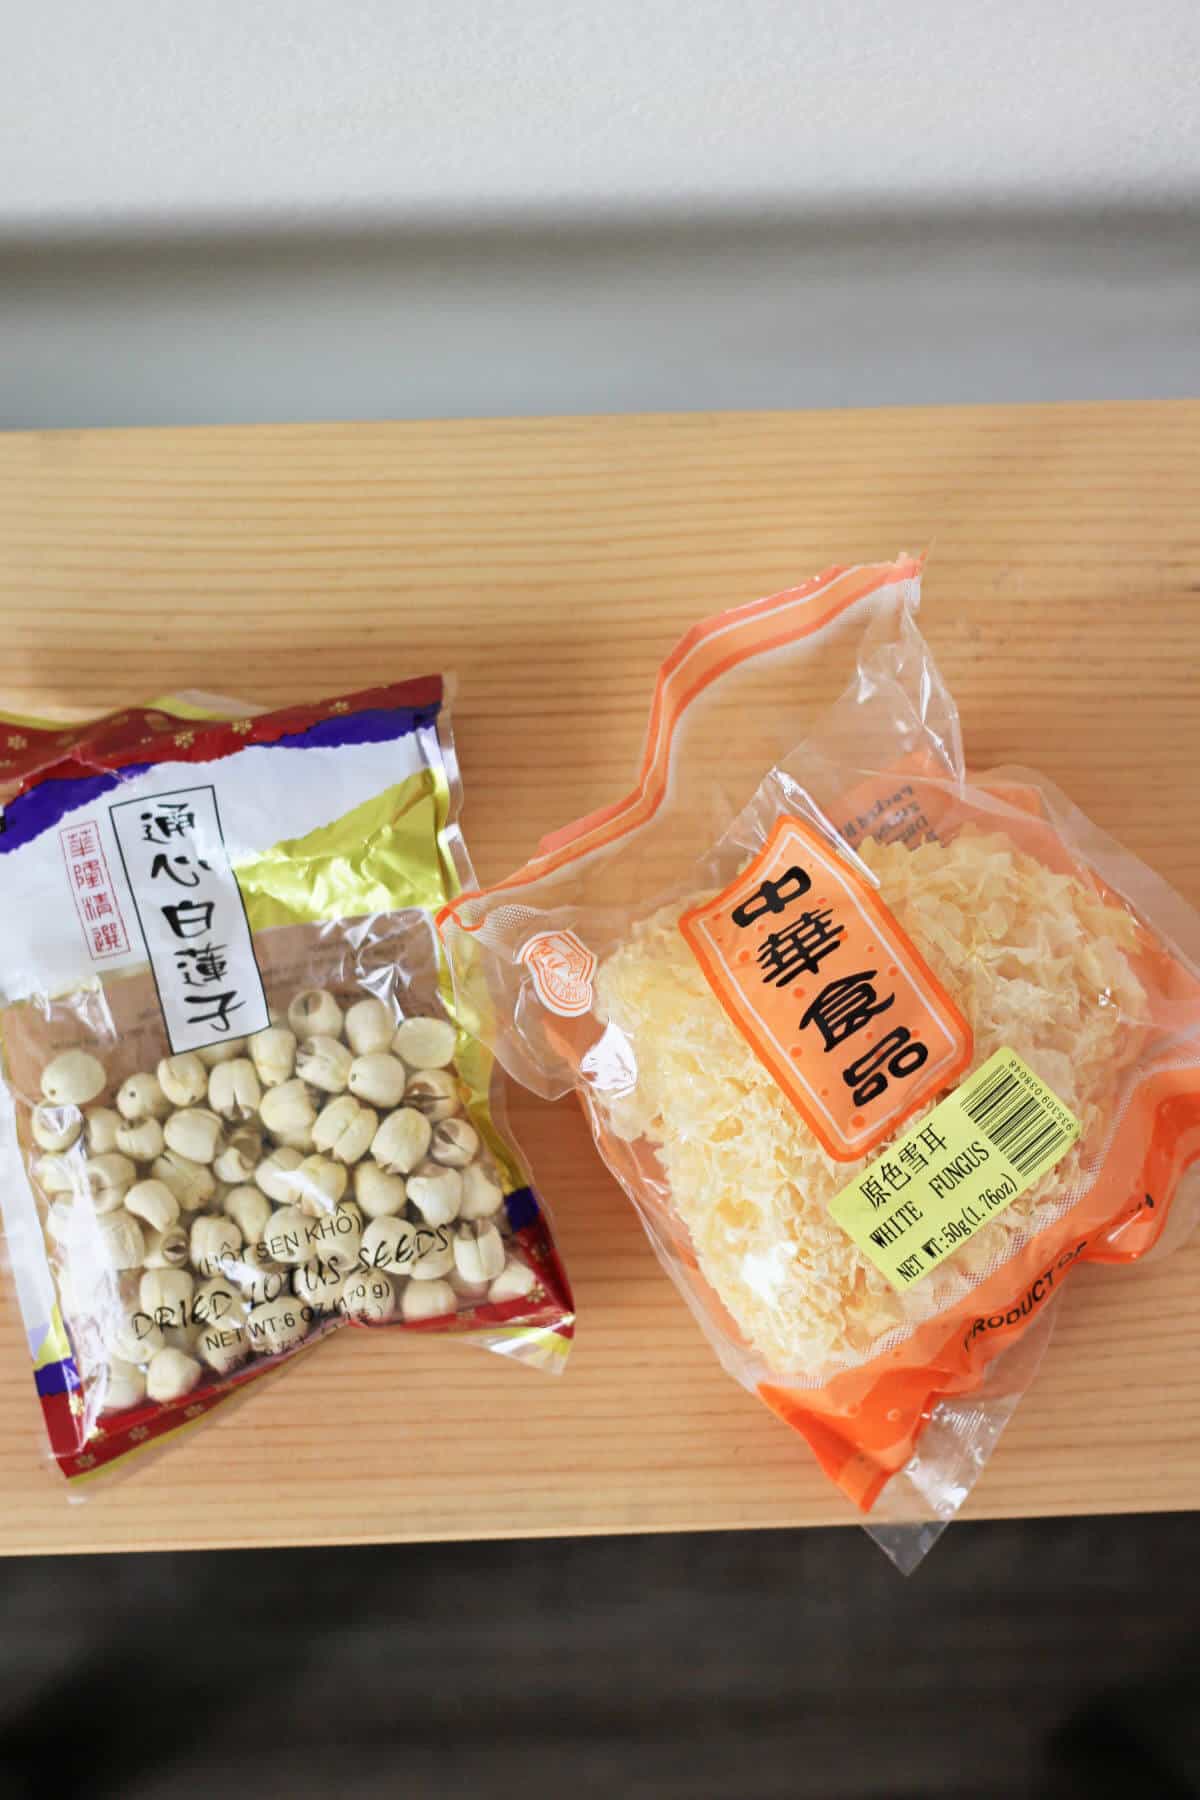 Bag of dried lotus seeds and bag of dried snow fungus.